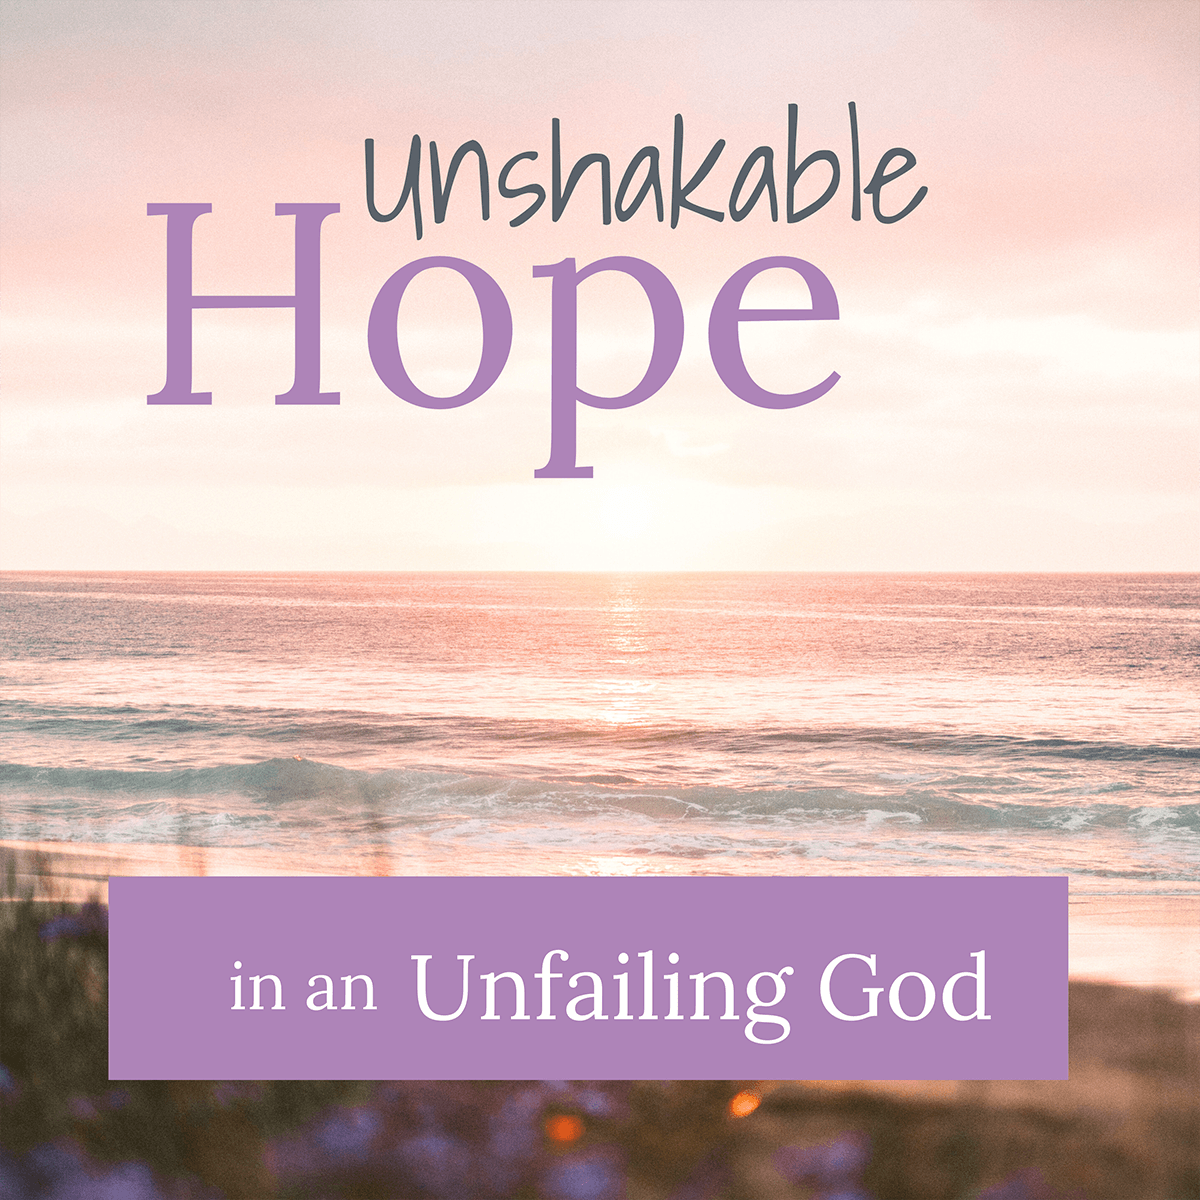 Unshakable Hope in an Unfailing God